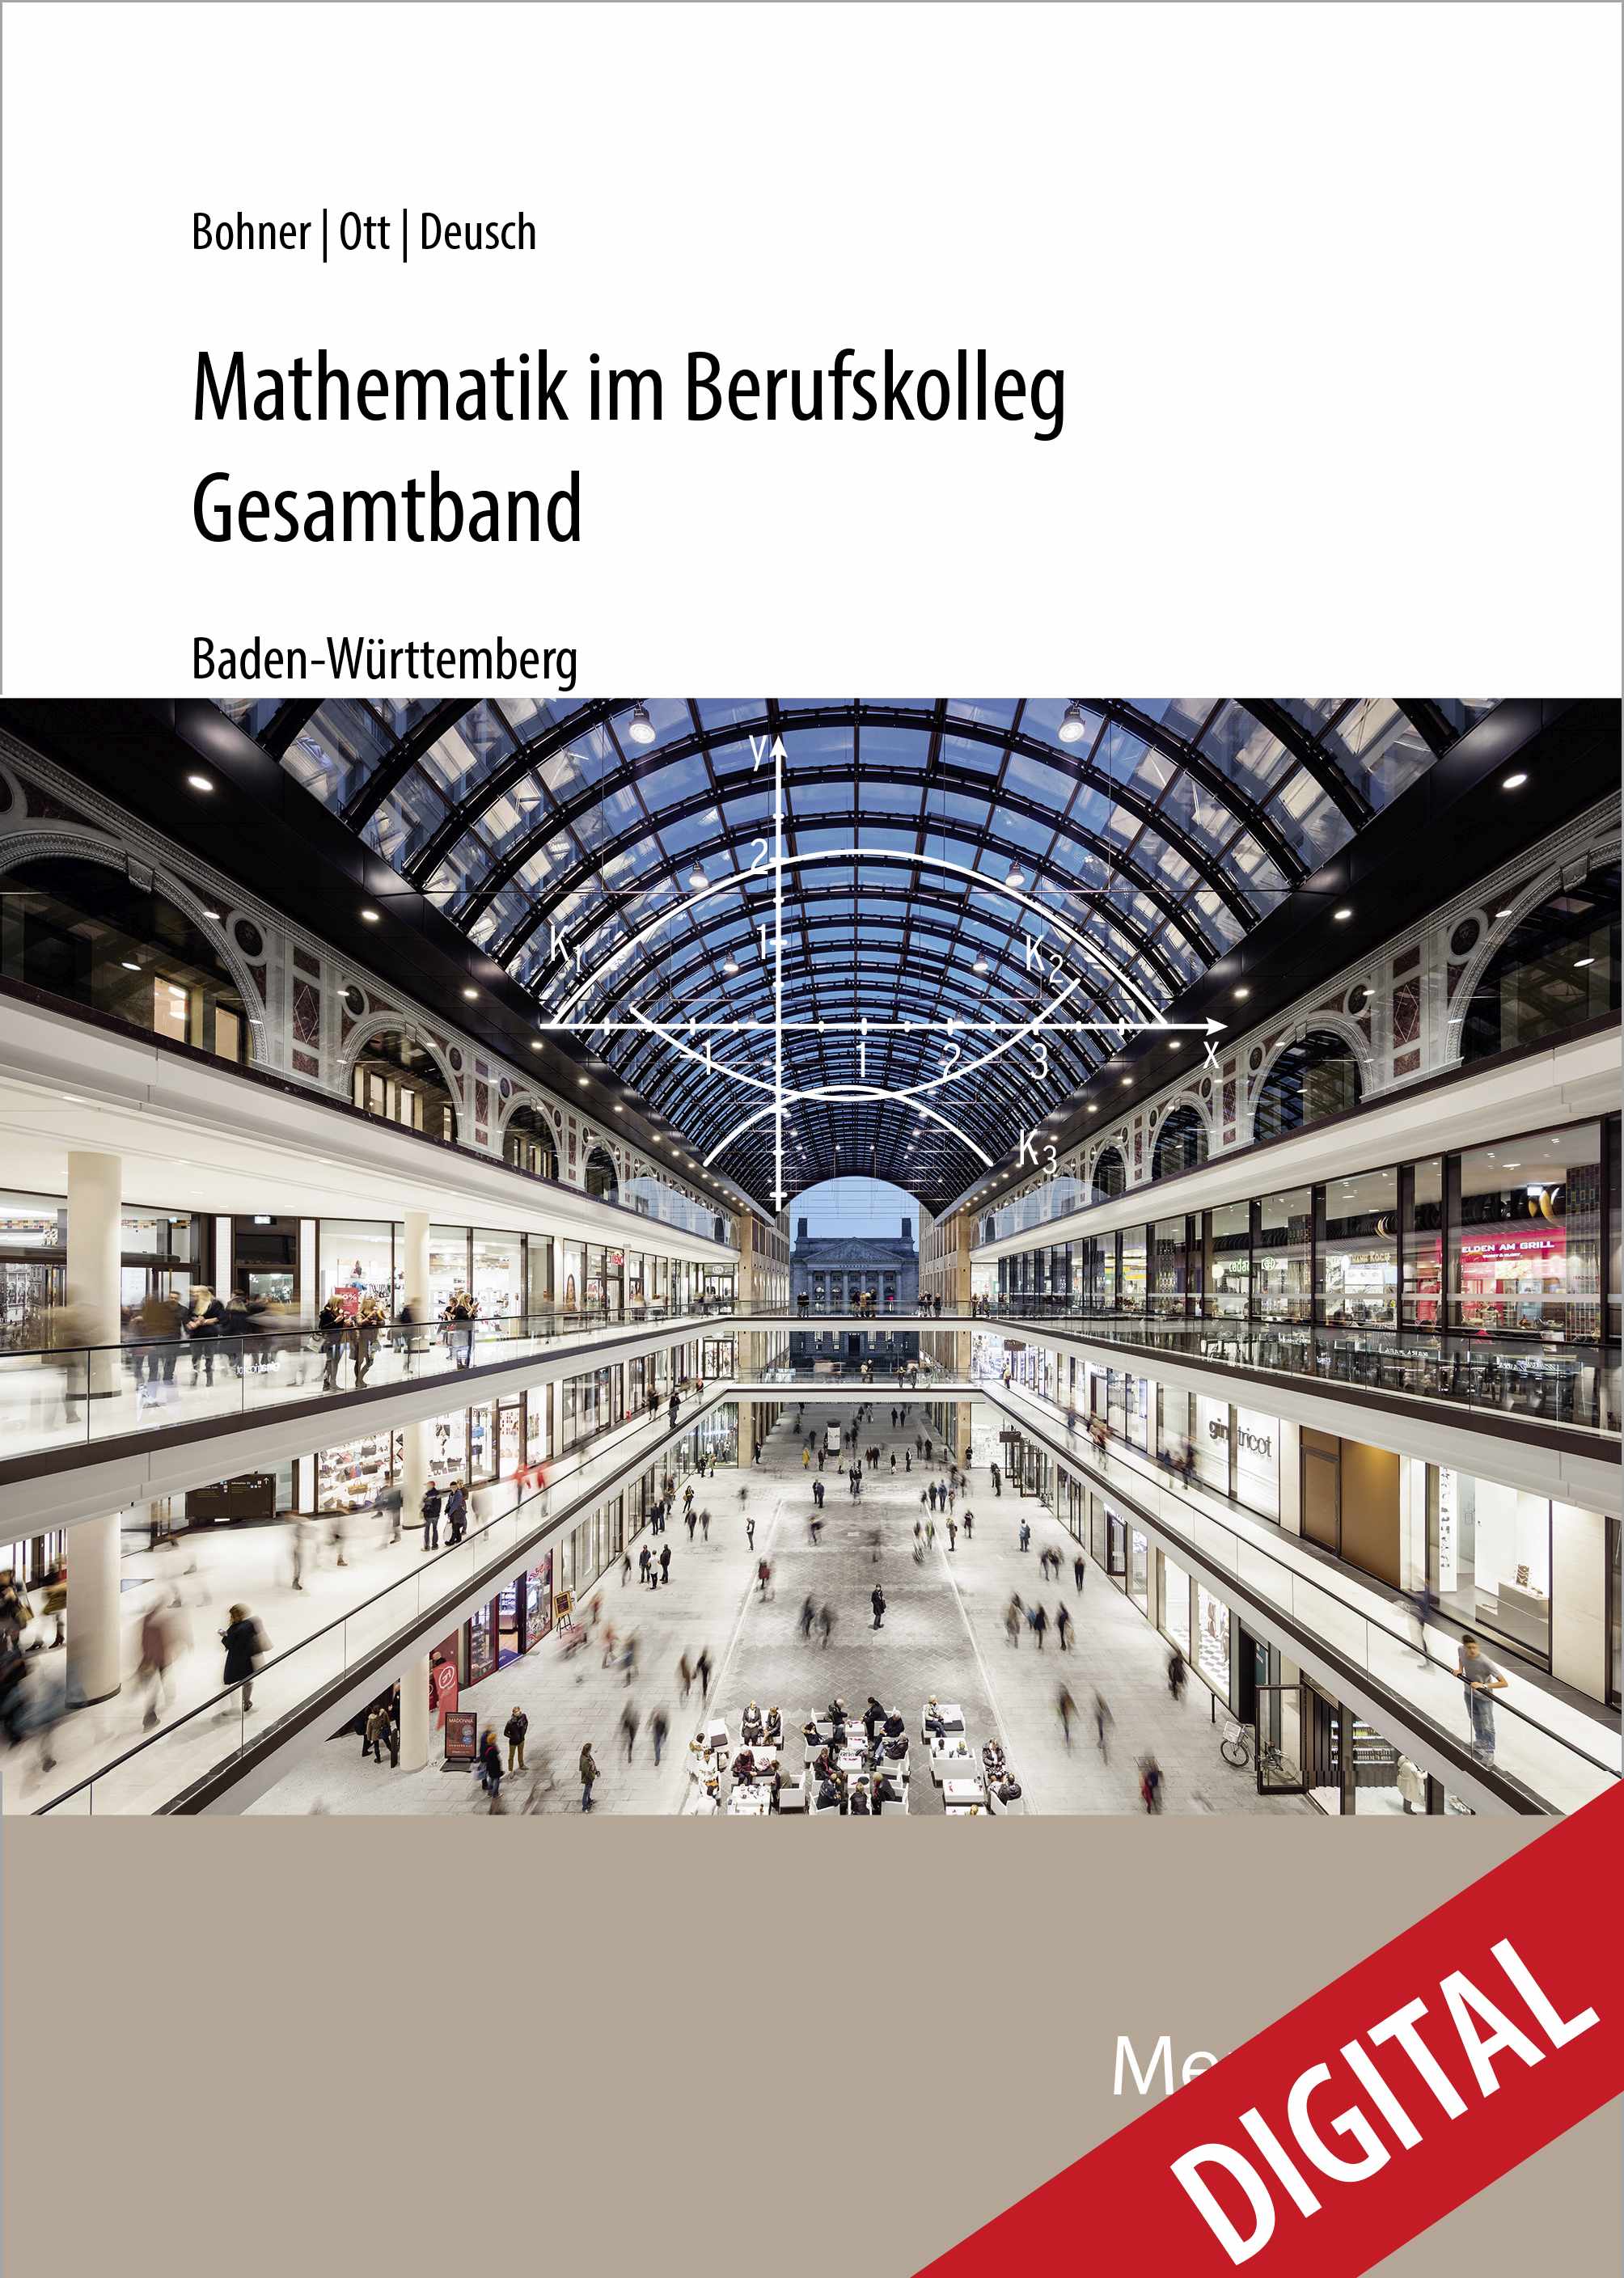 Mathematik im Berufskolleg - Gesamtband (Baden-Württemberg)